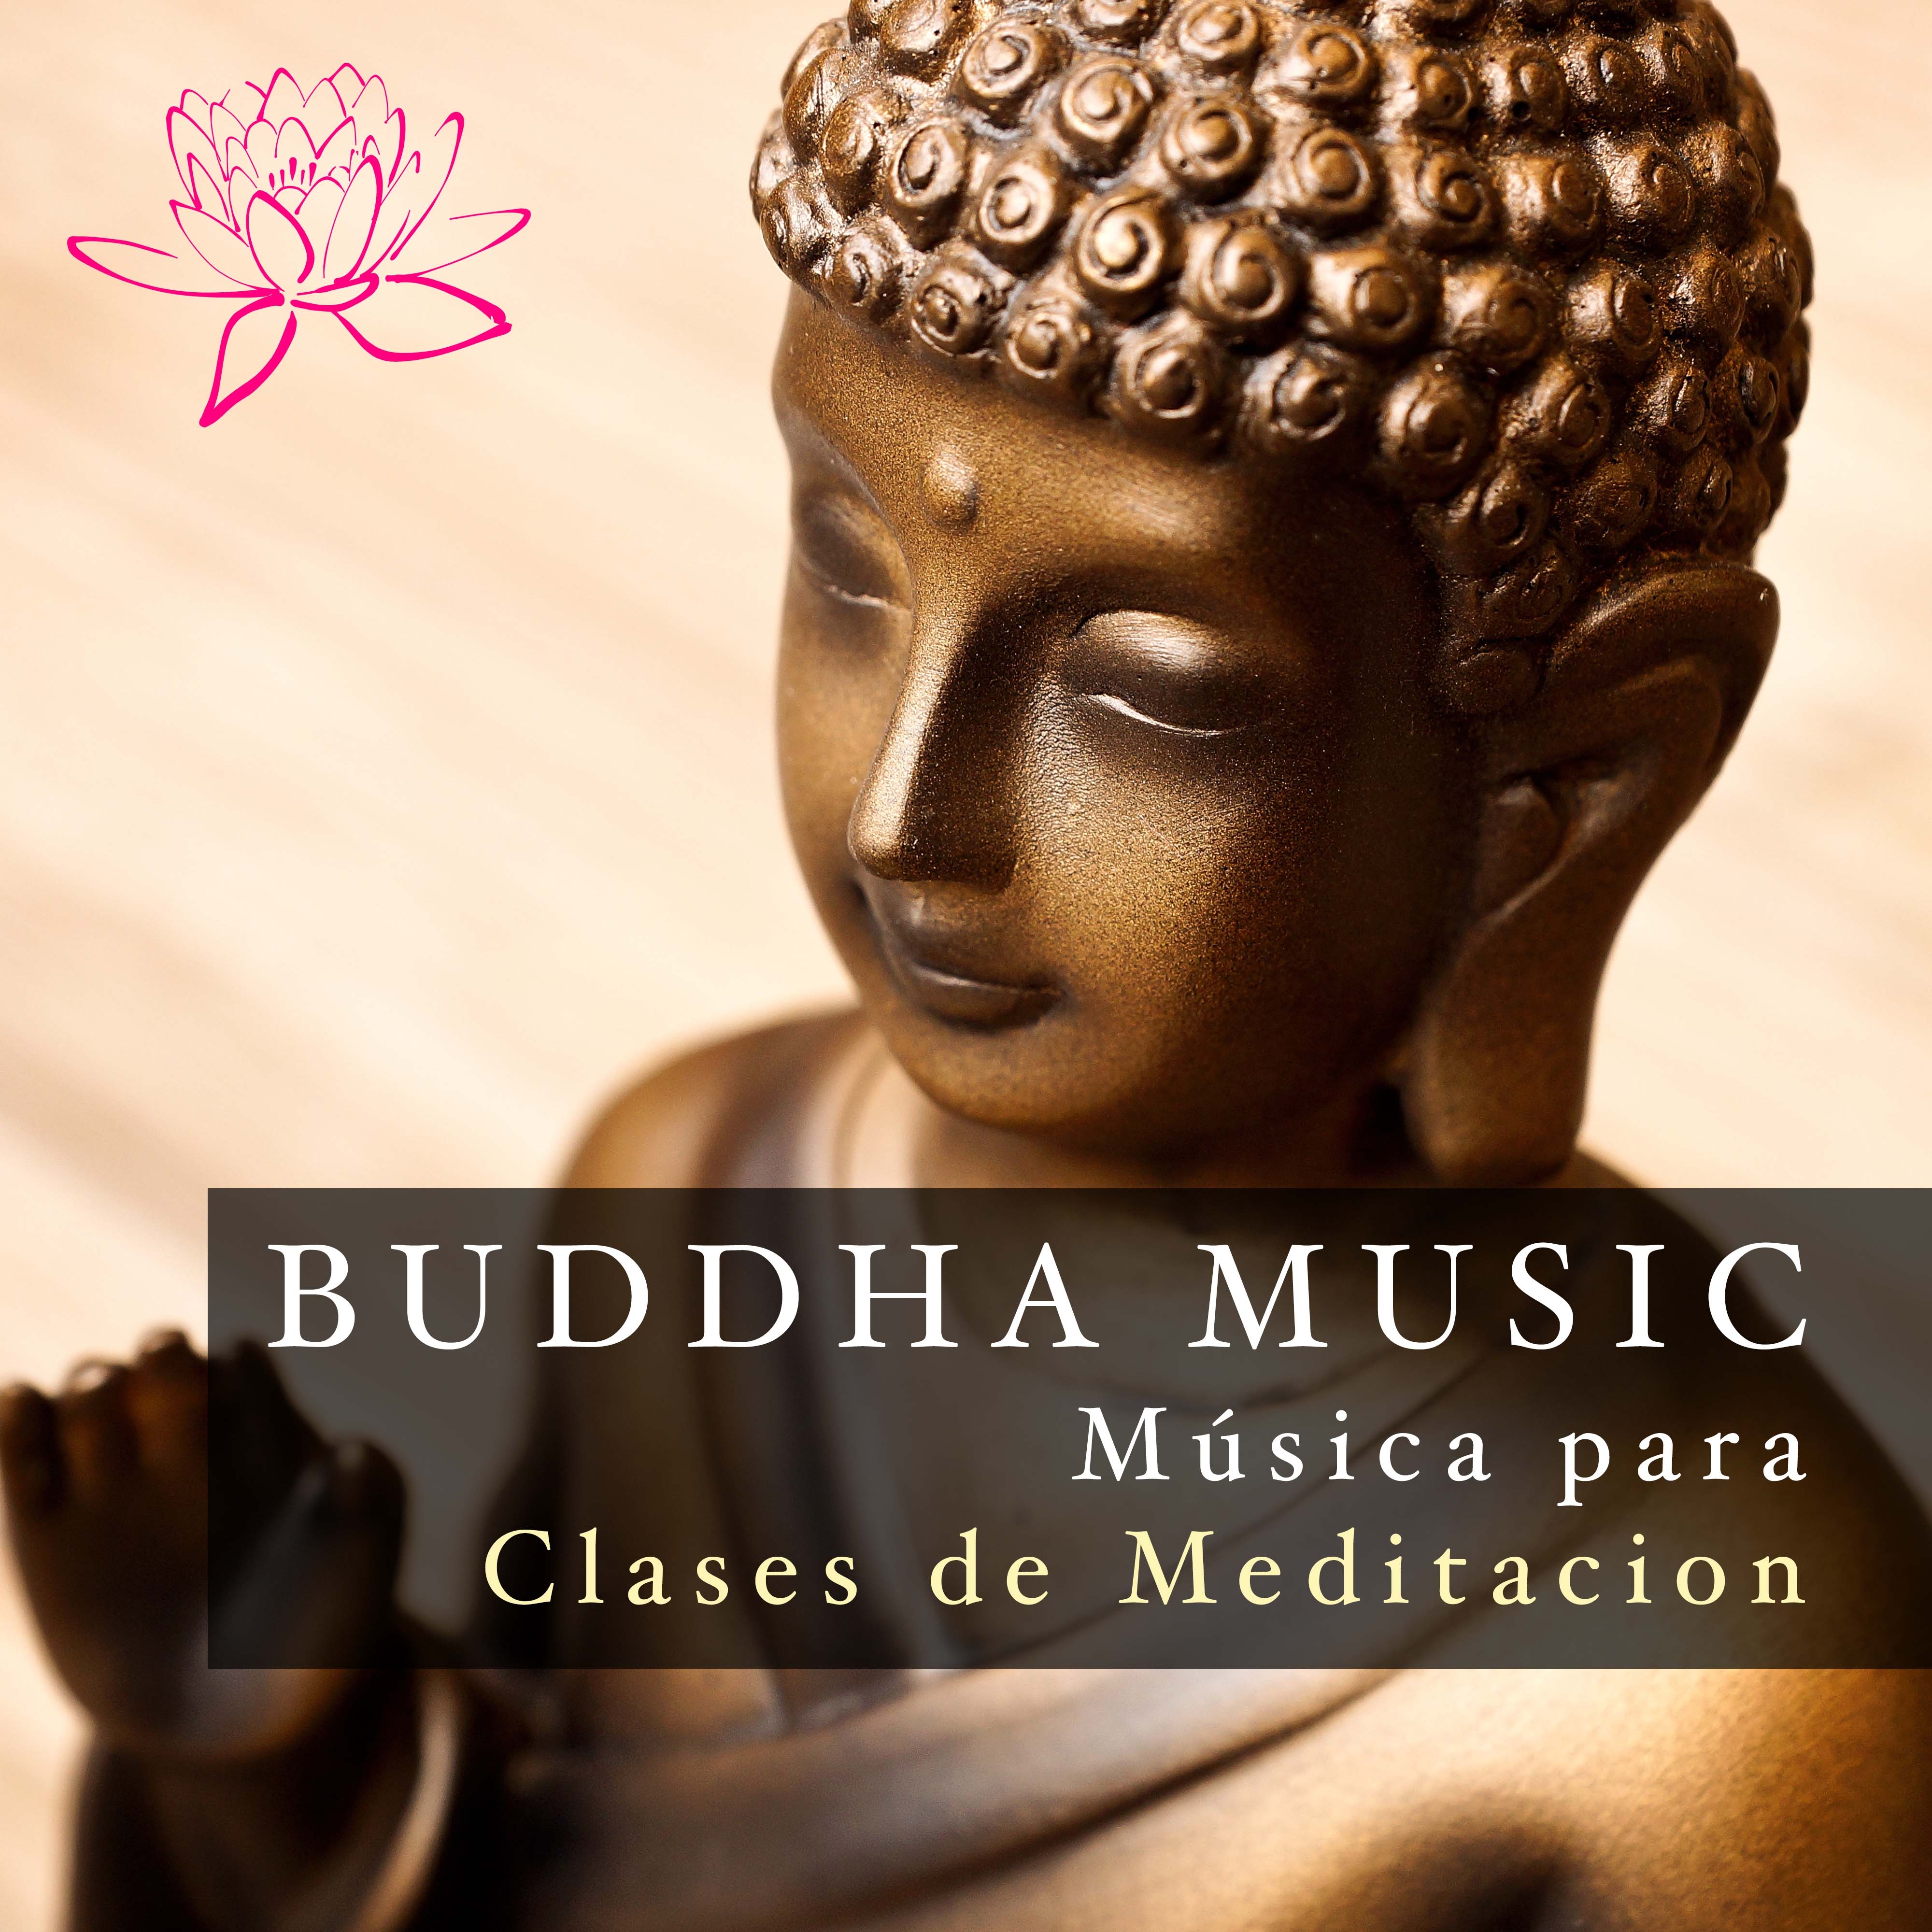 Buddha Music - Musica para Clases de Meditacion